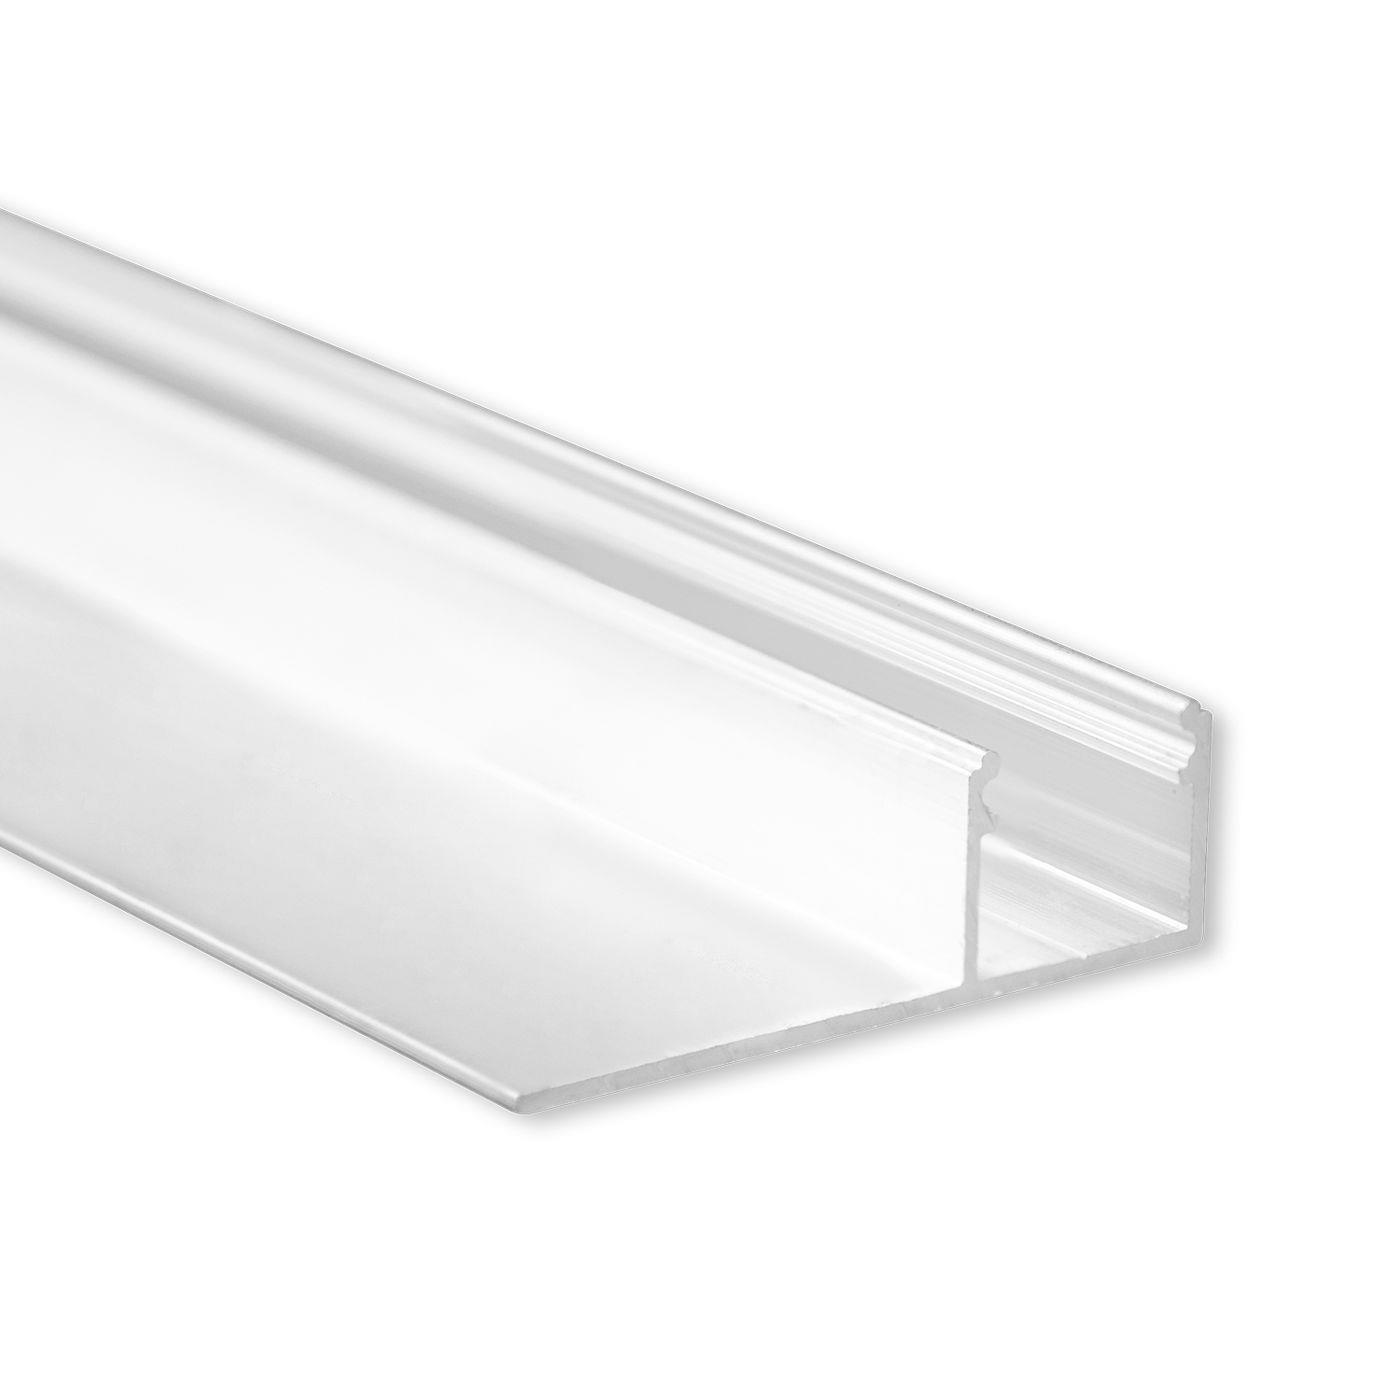 2m LED Profil TBP4 Silber 47x14,5mm Aluminium Trockenbauprofil für 14mm LED Streifen